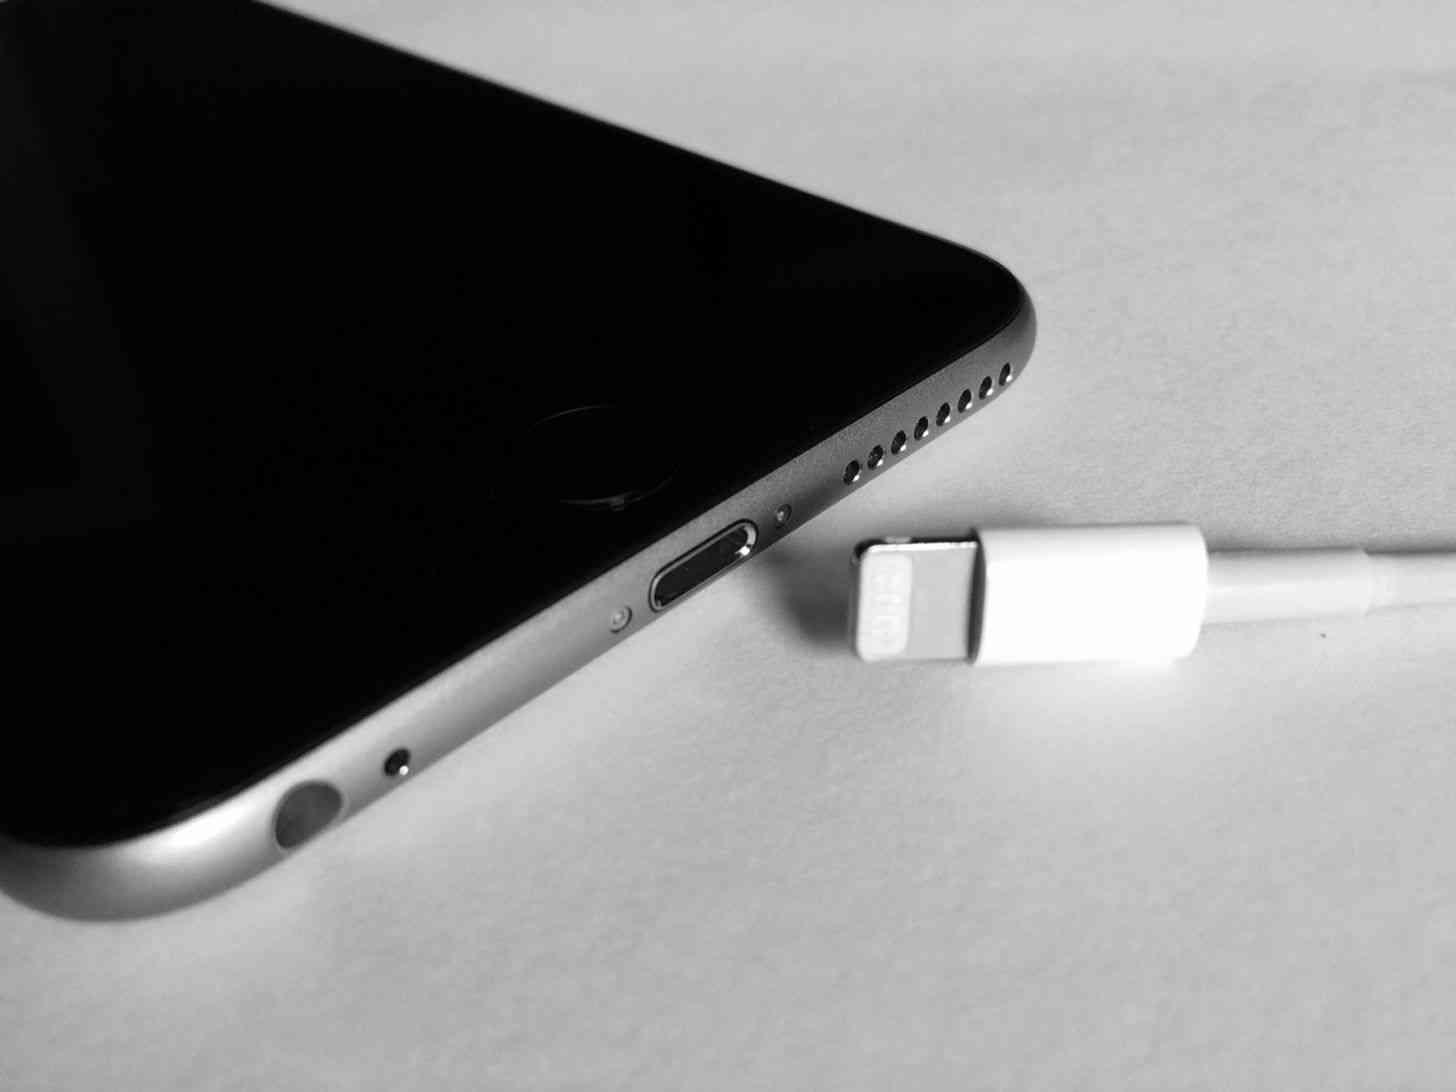 iPhone 6 charging port